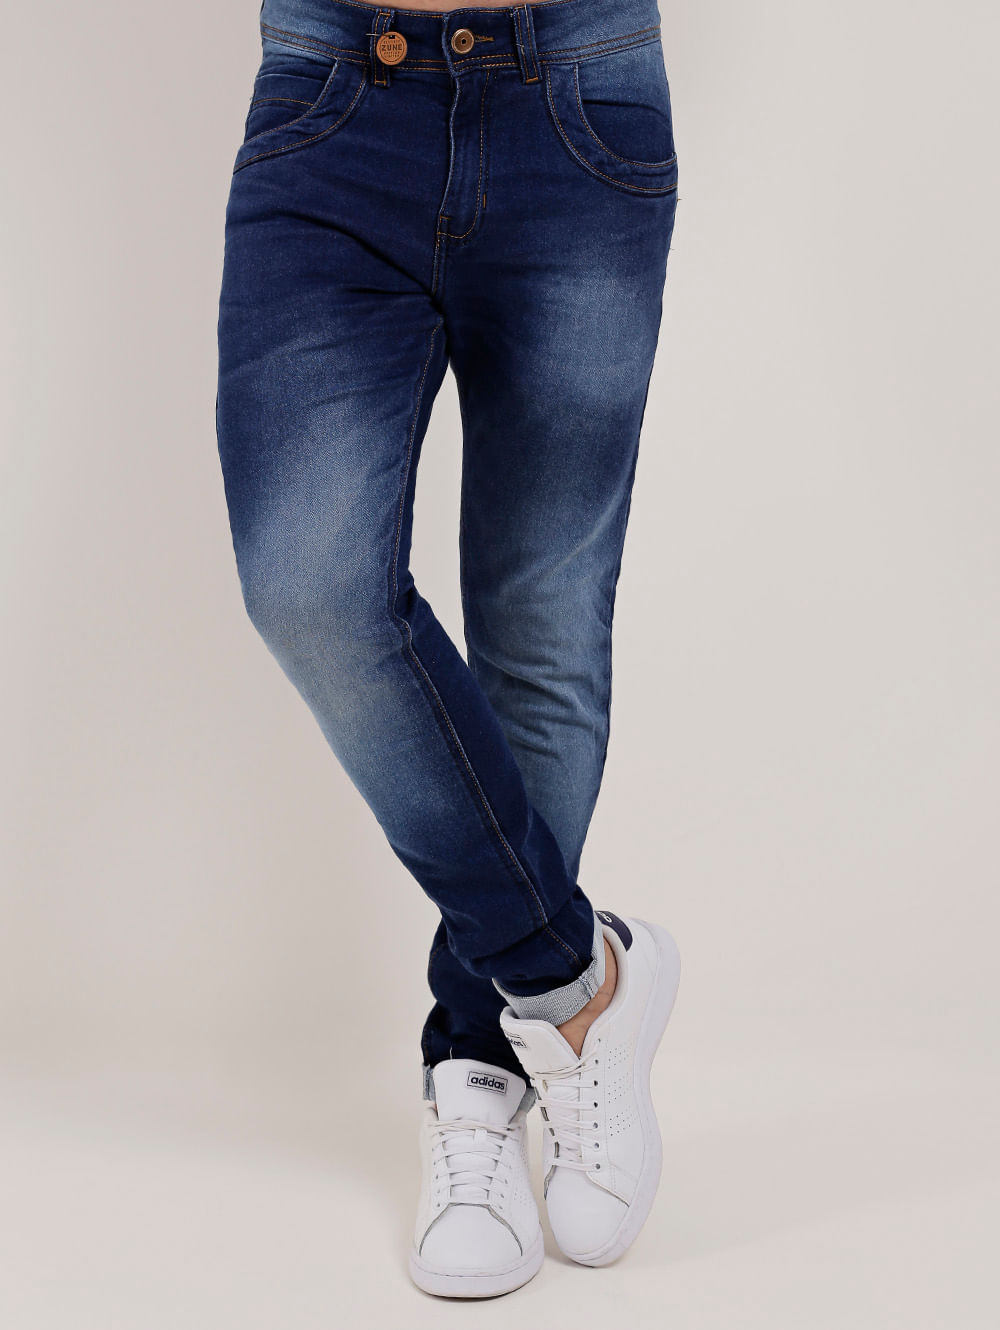 jeans moletom masculino